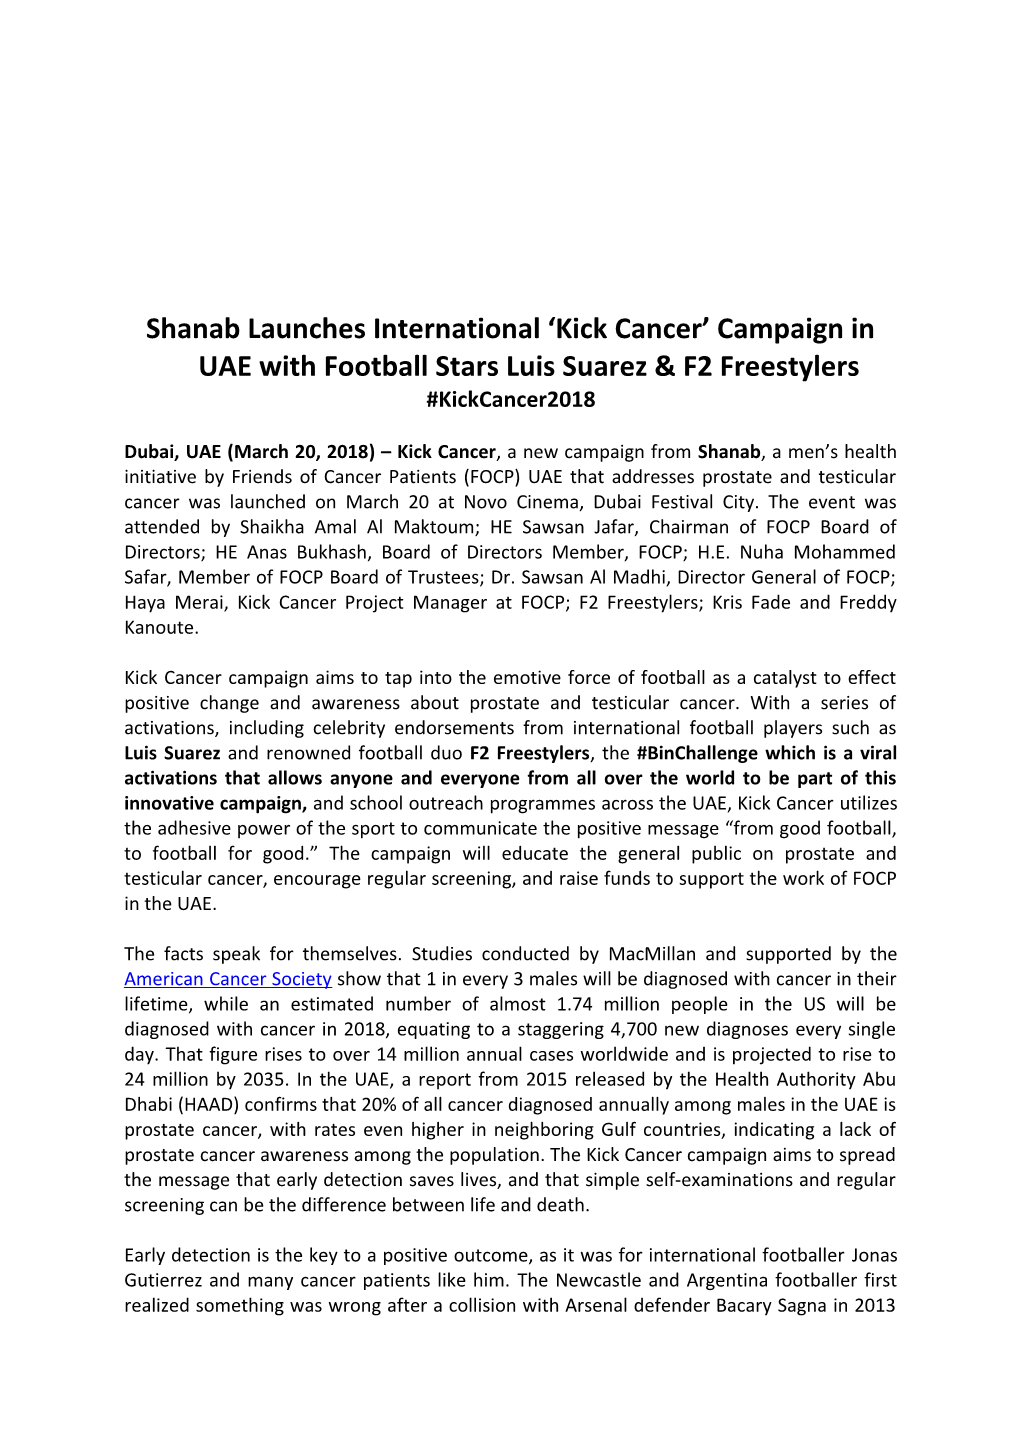 Shanablaunchesinternational Kick Cancer Campaign in UAE with Football Stars Luis Suarez